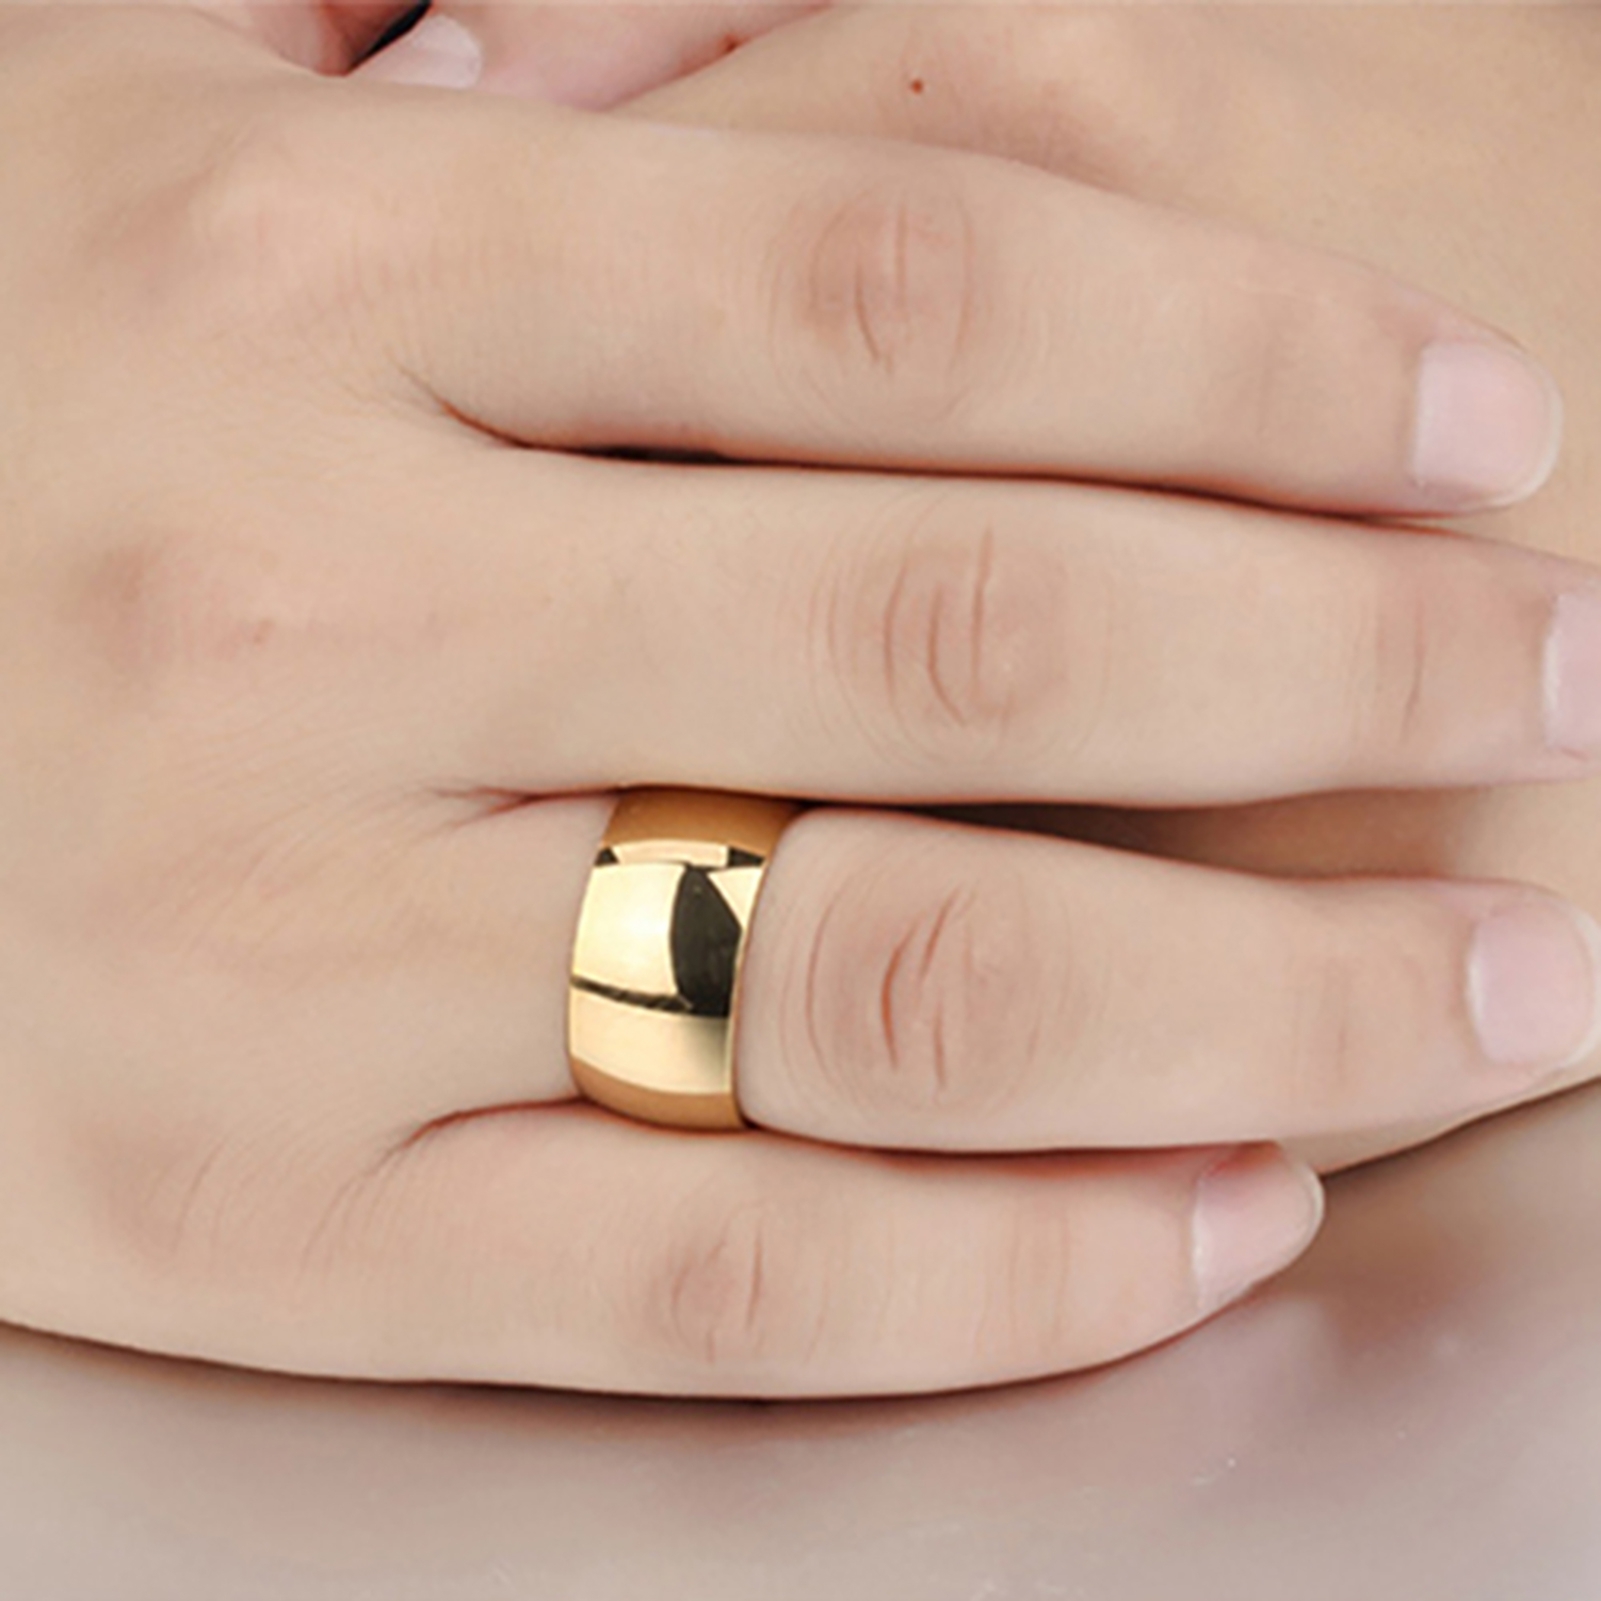 Широкое кольцо на руке